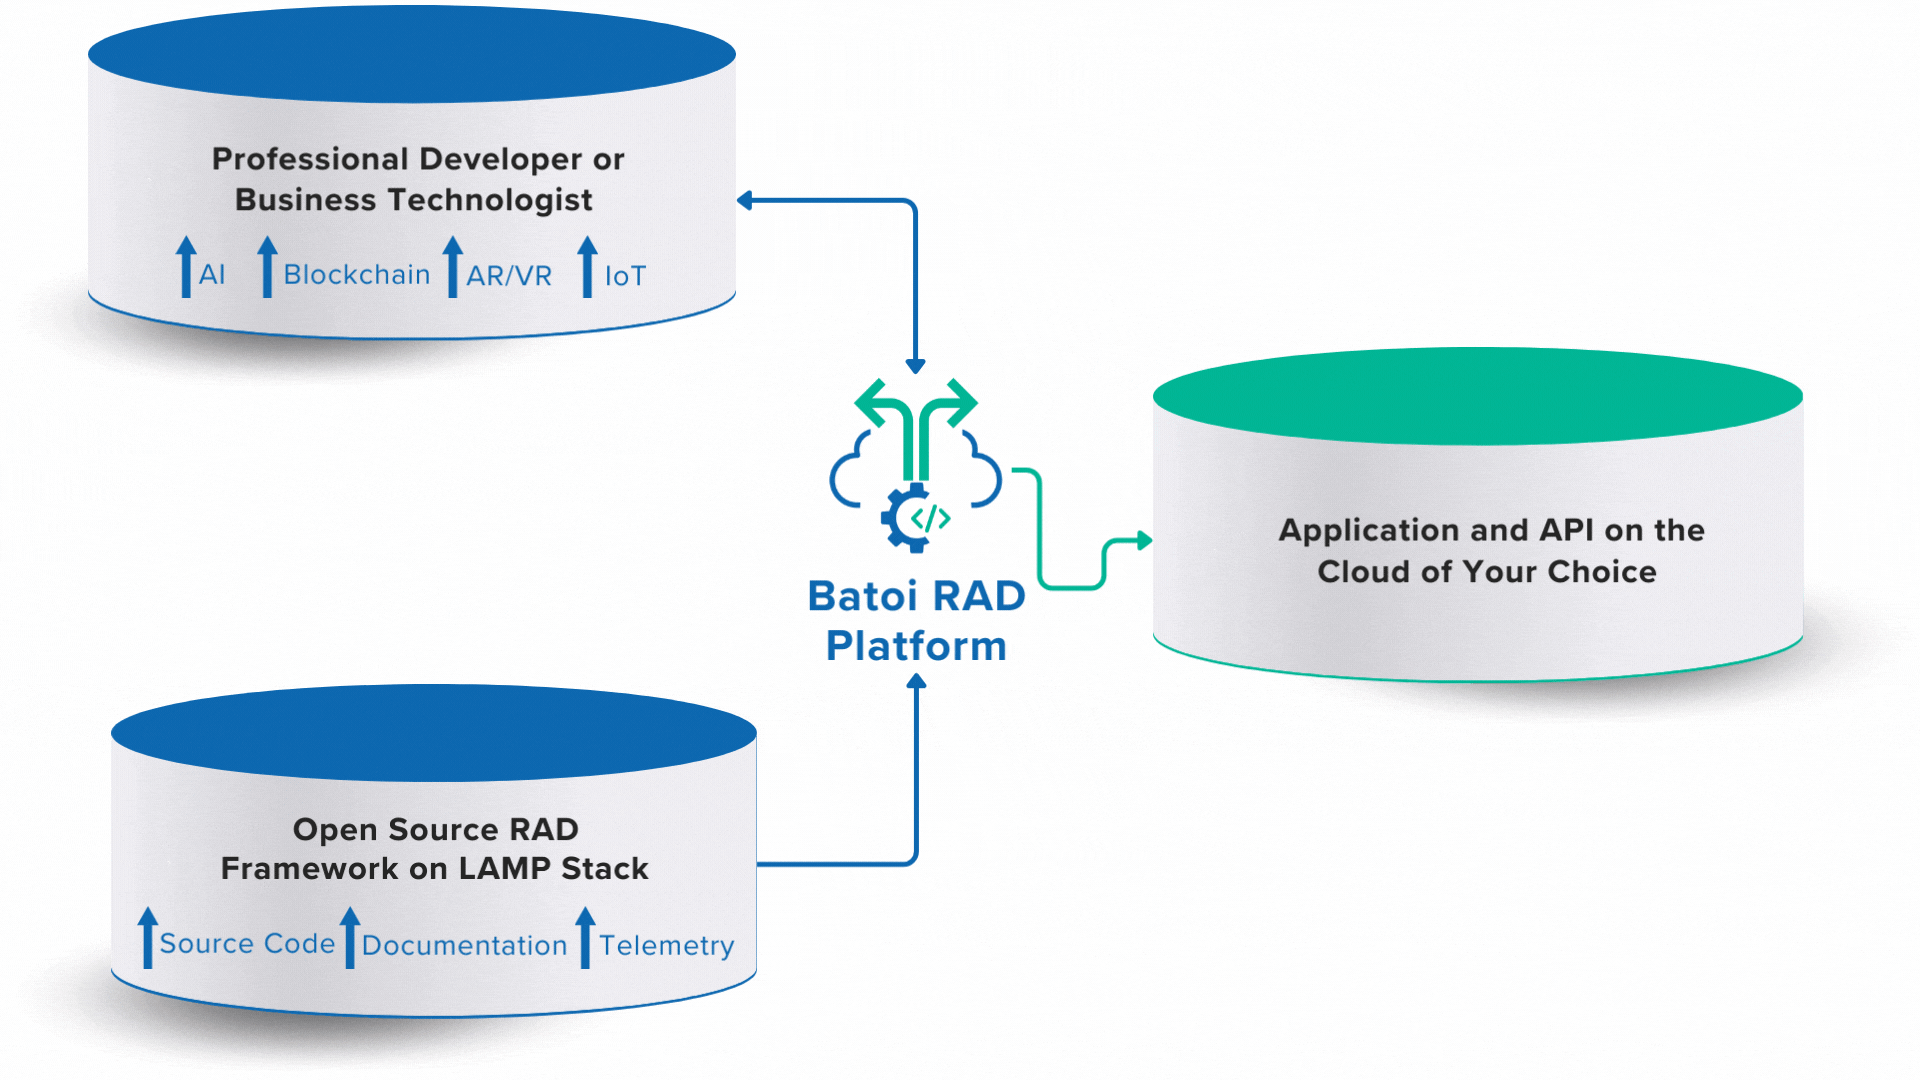 Rapid Application Development Platform